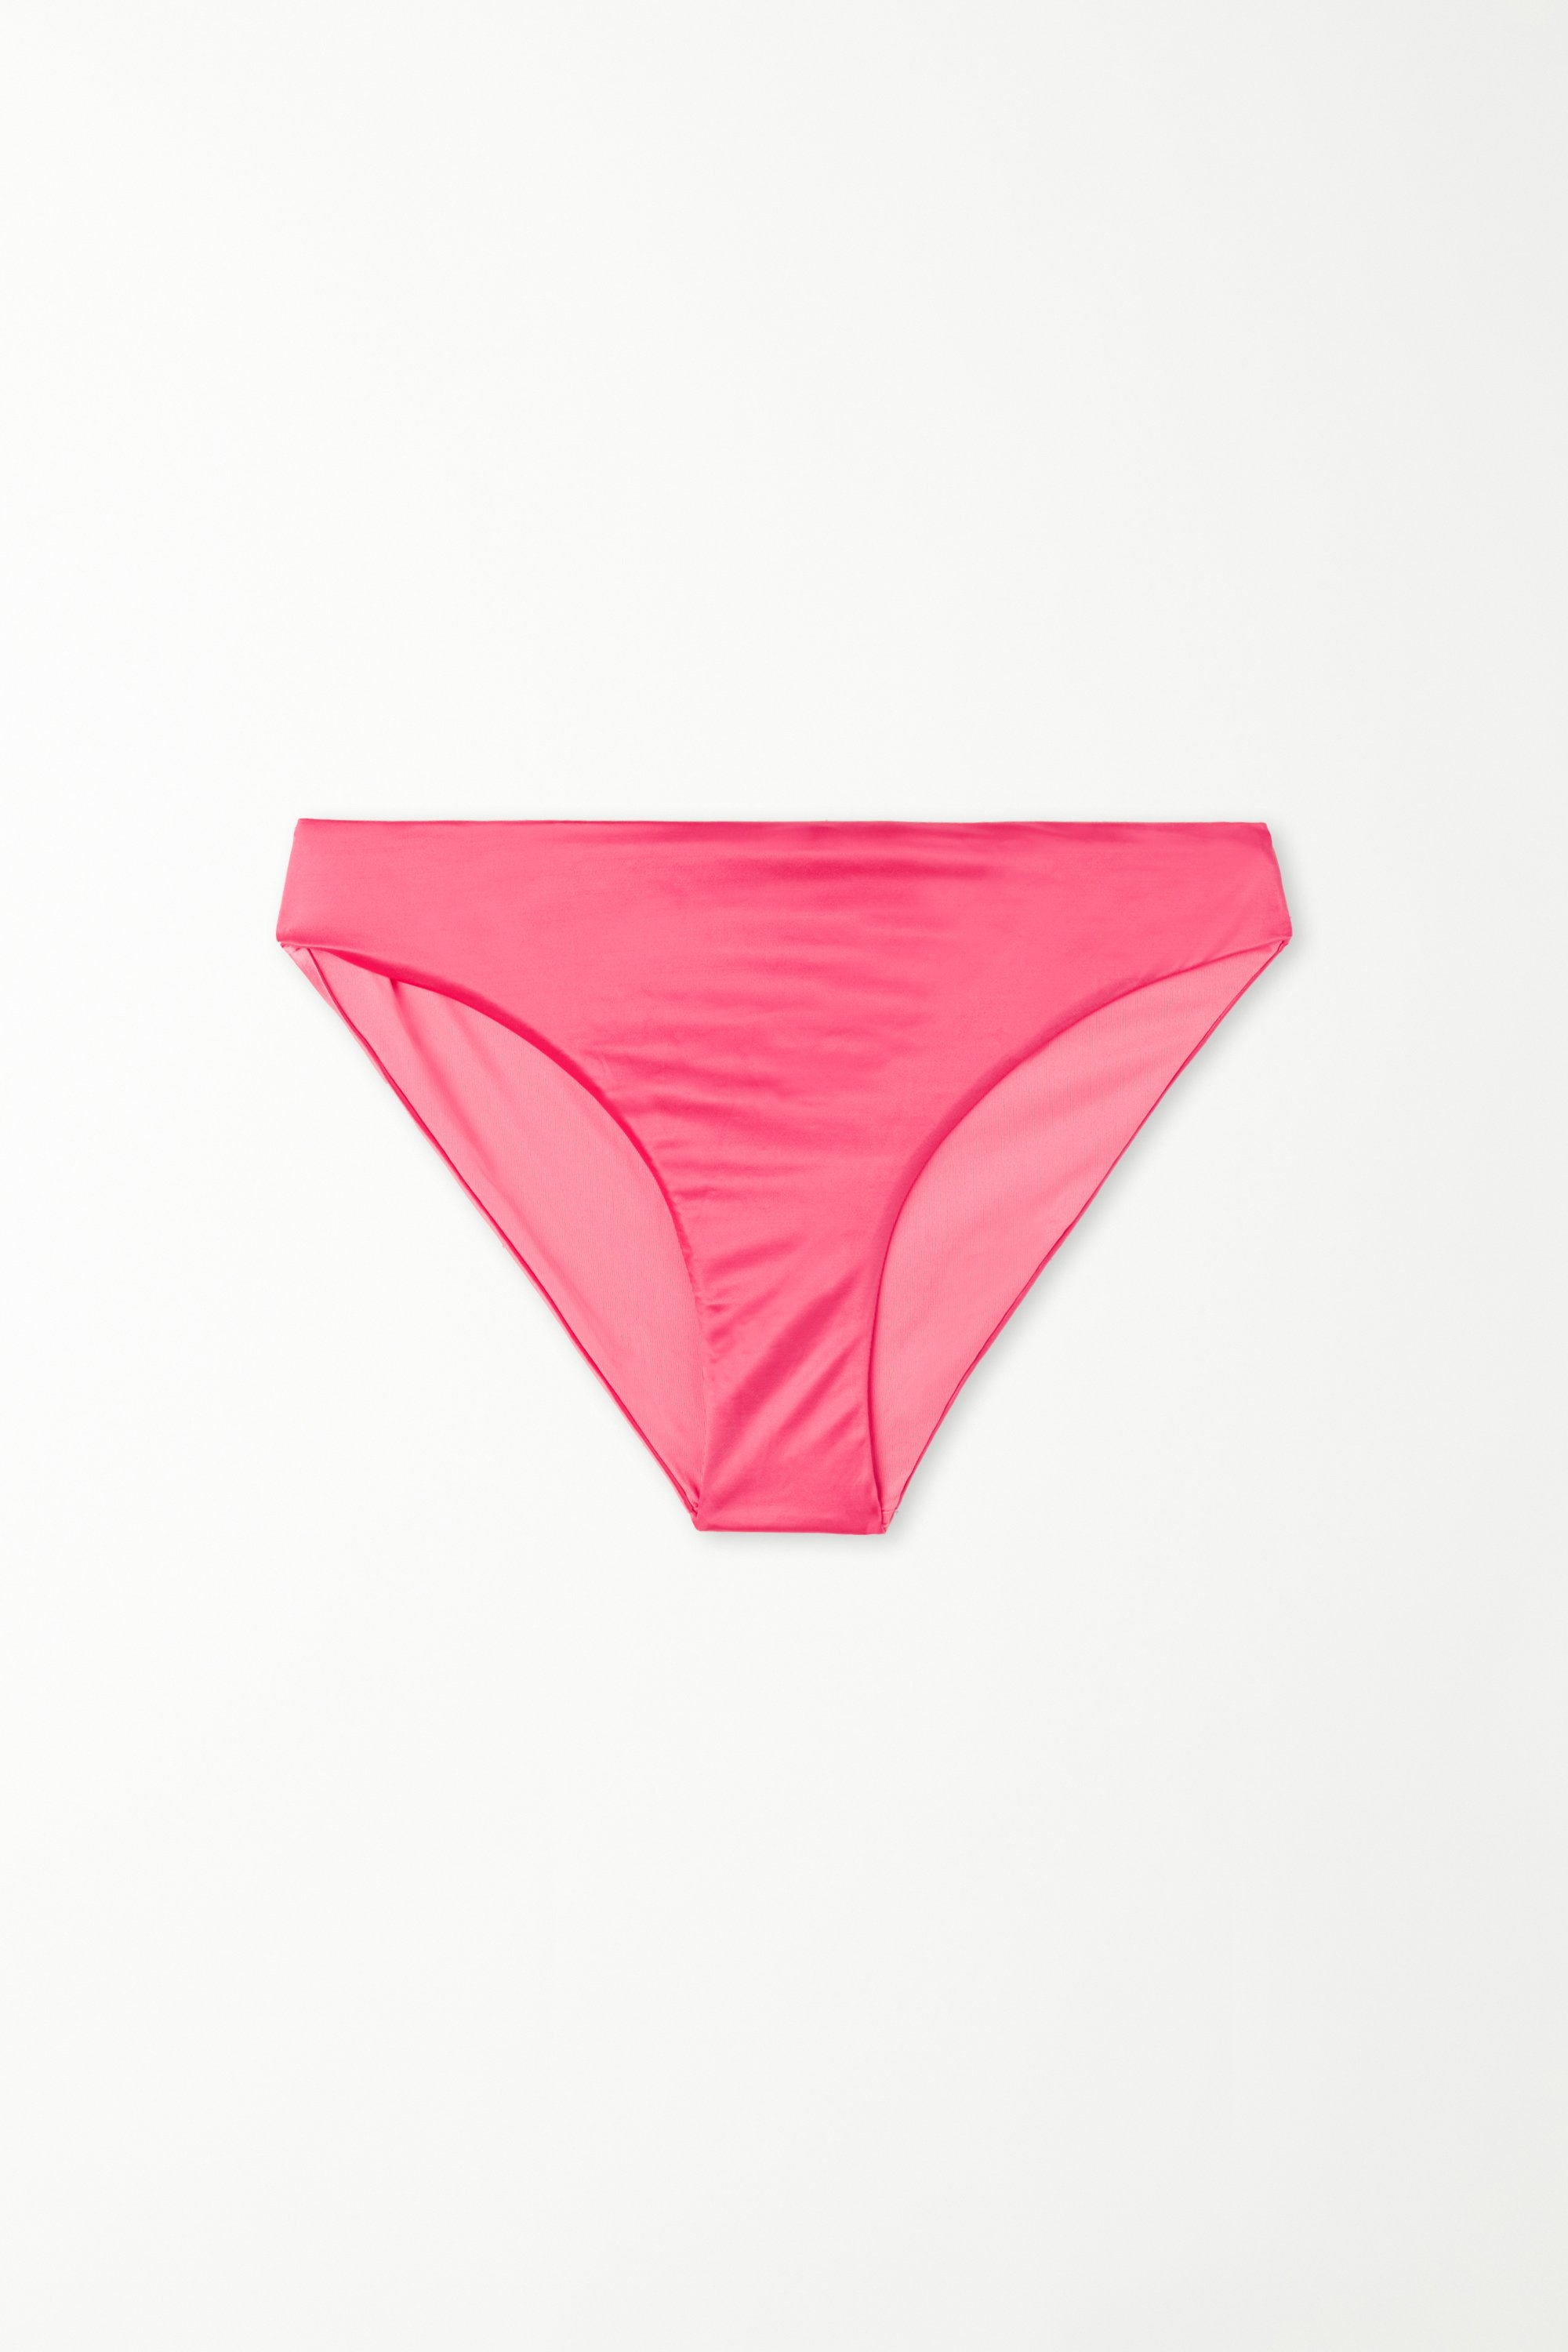 Shiny Summer Pink Classic Bikini Bottom